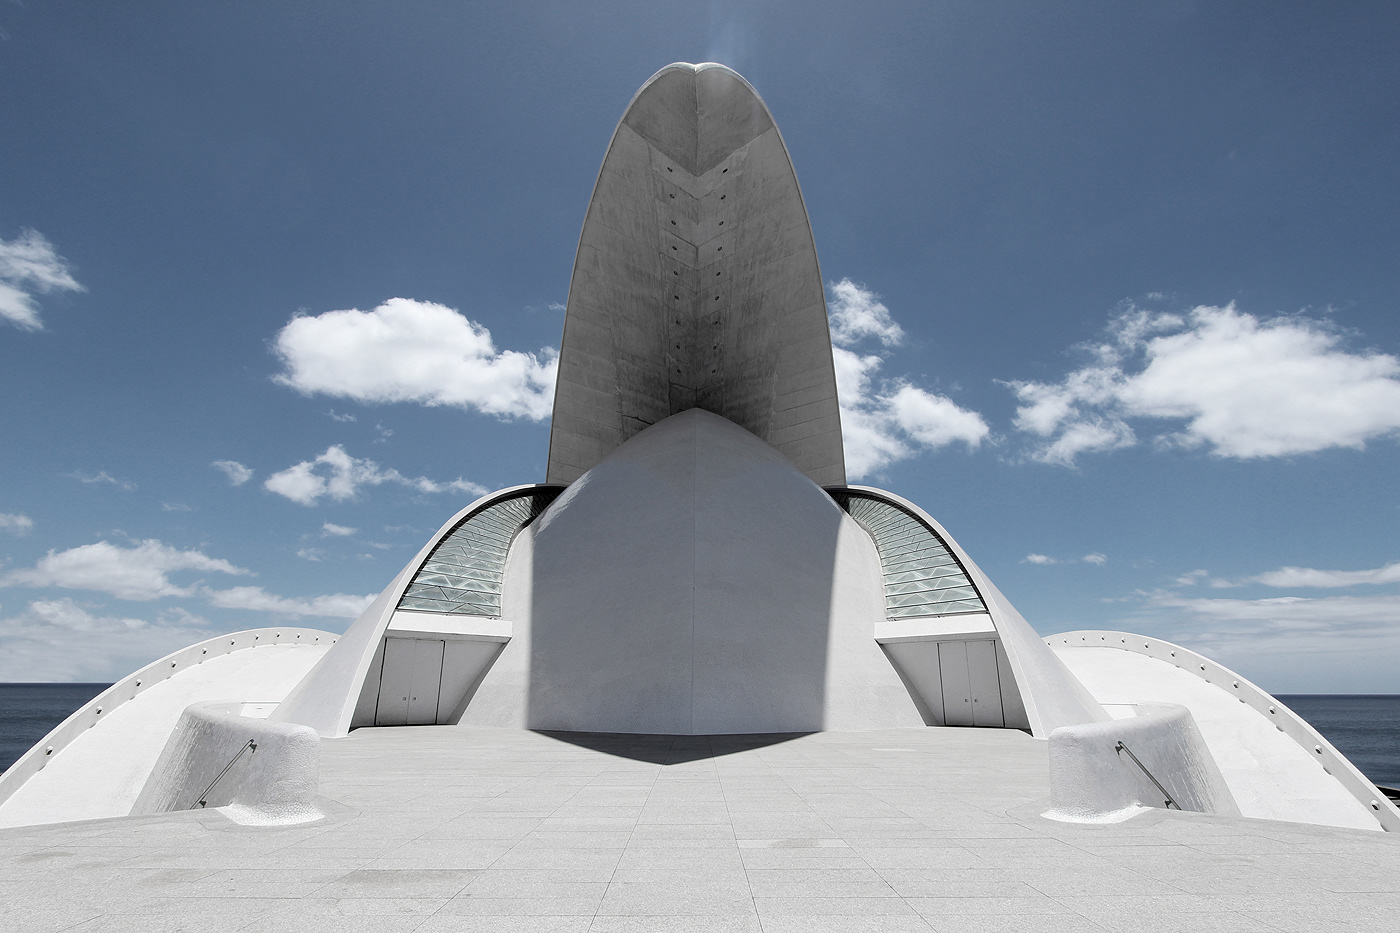 White contemporary architecture modern architecture calatrava spain concert hall building tile lifestyle Travel